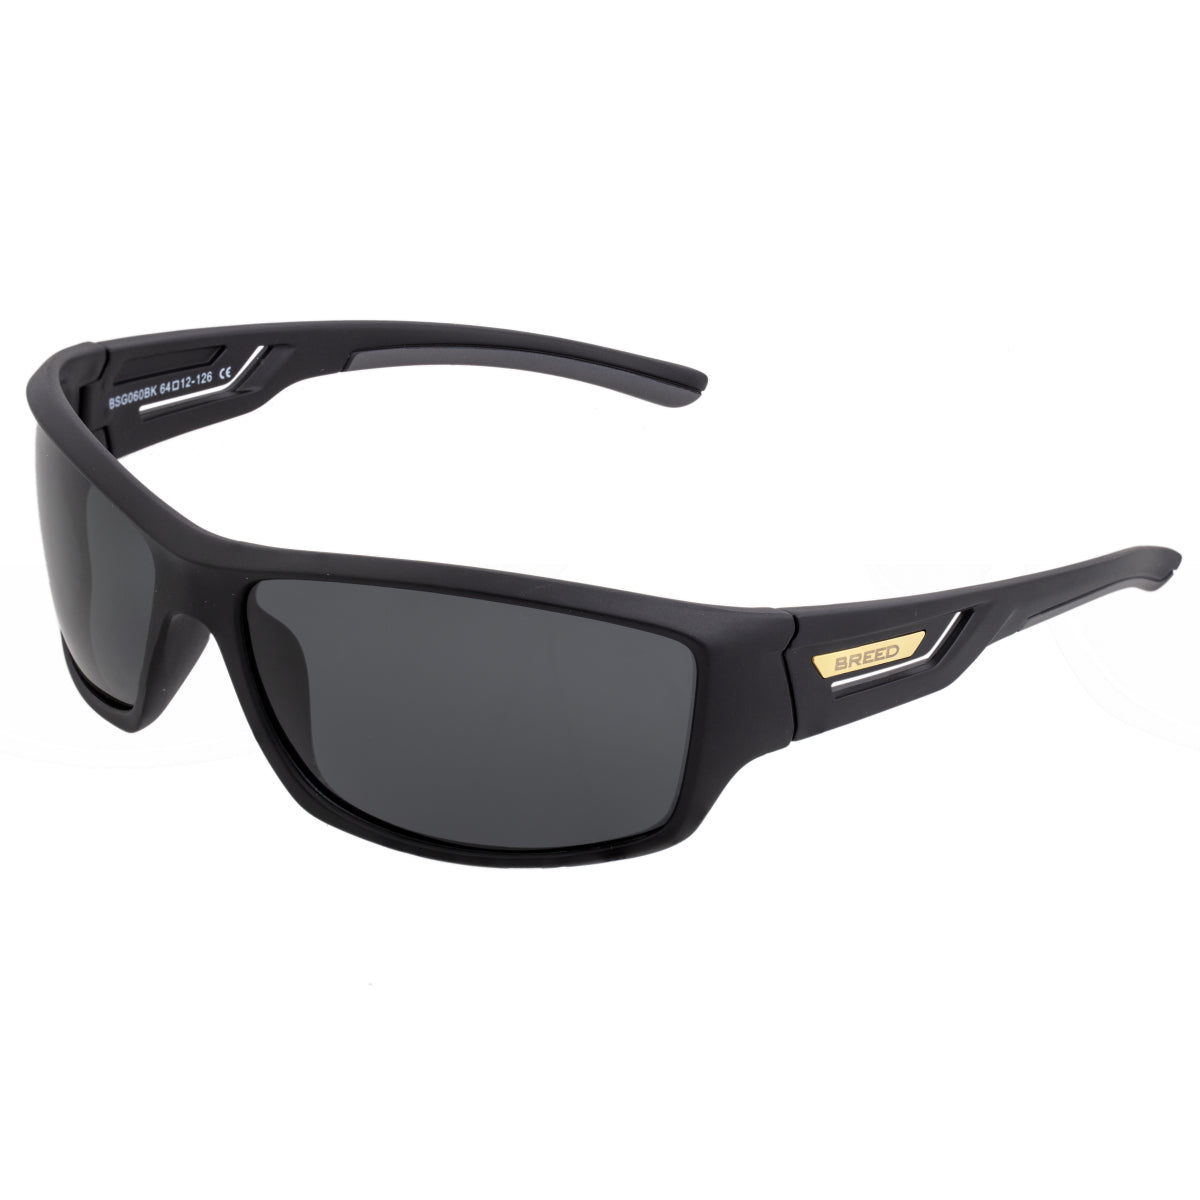 Breed Aquarius Polarized Sunglasses - Black/Black - BSG060BK